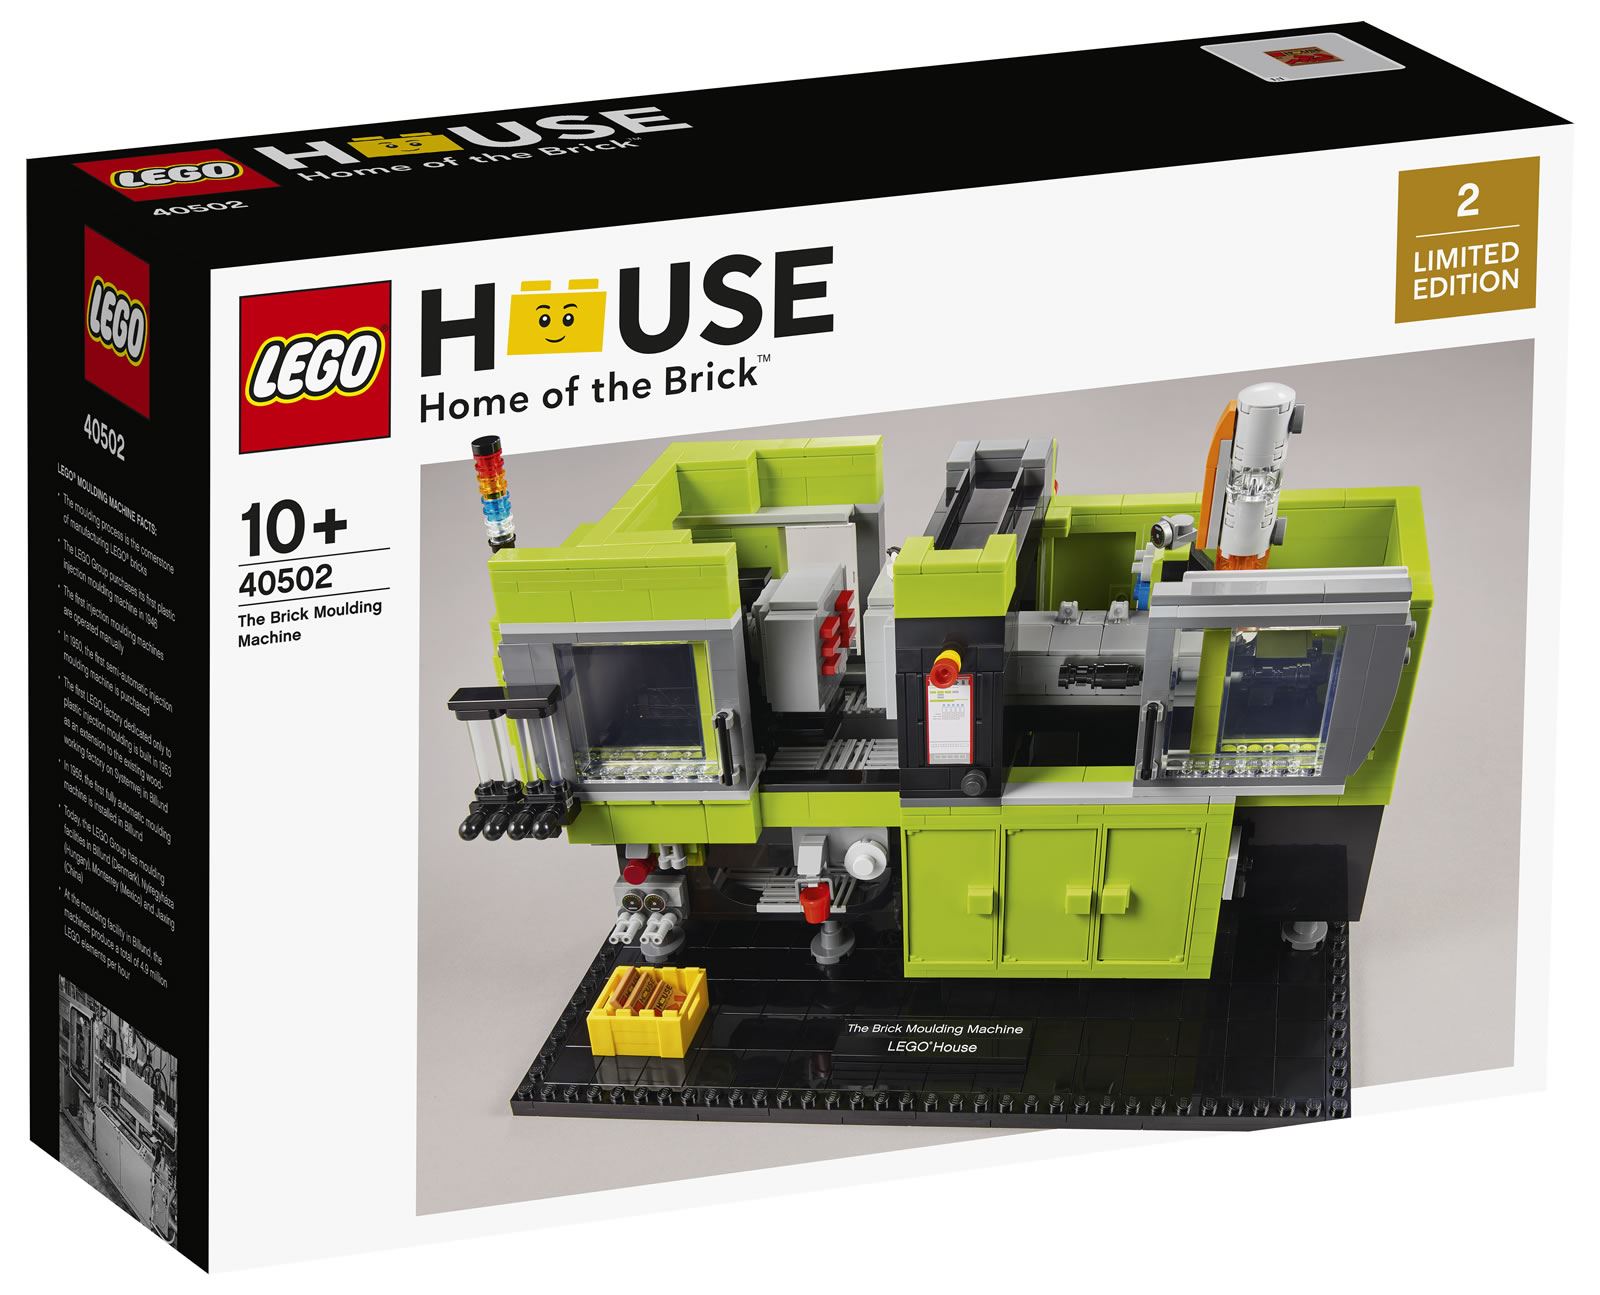 LEGO The Brick Molding Machine is de nieuwe exclusieve LEGO House-set